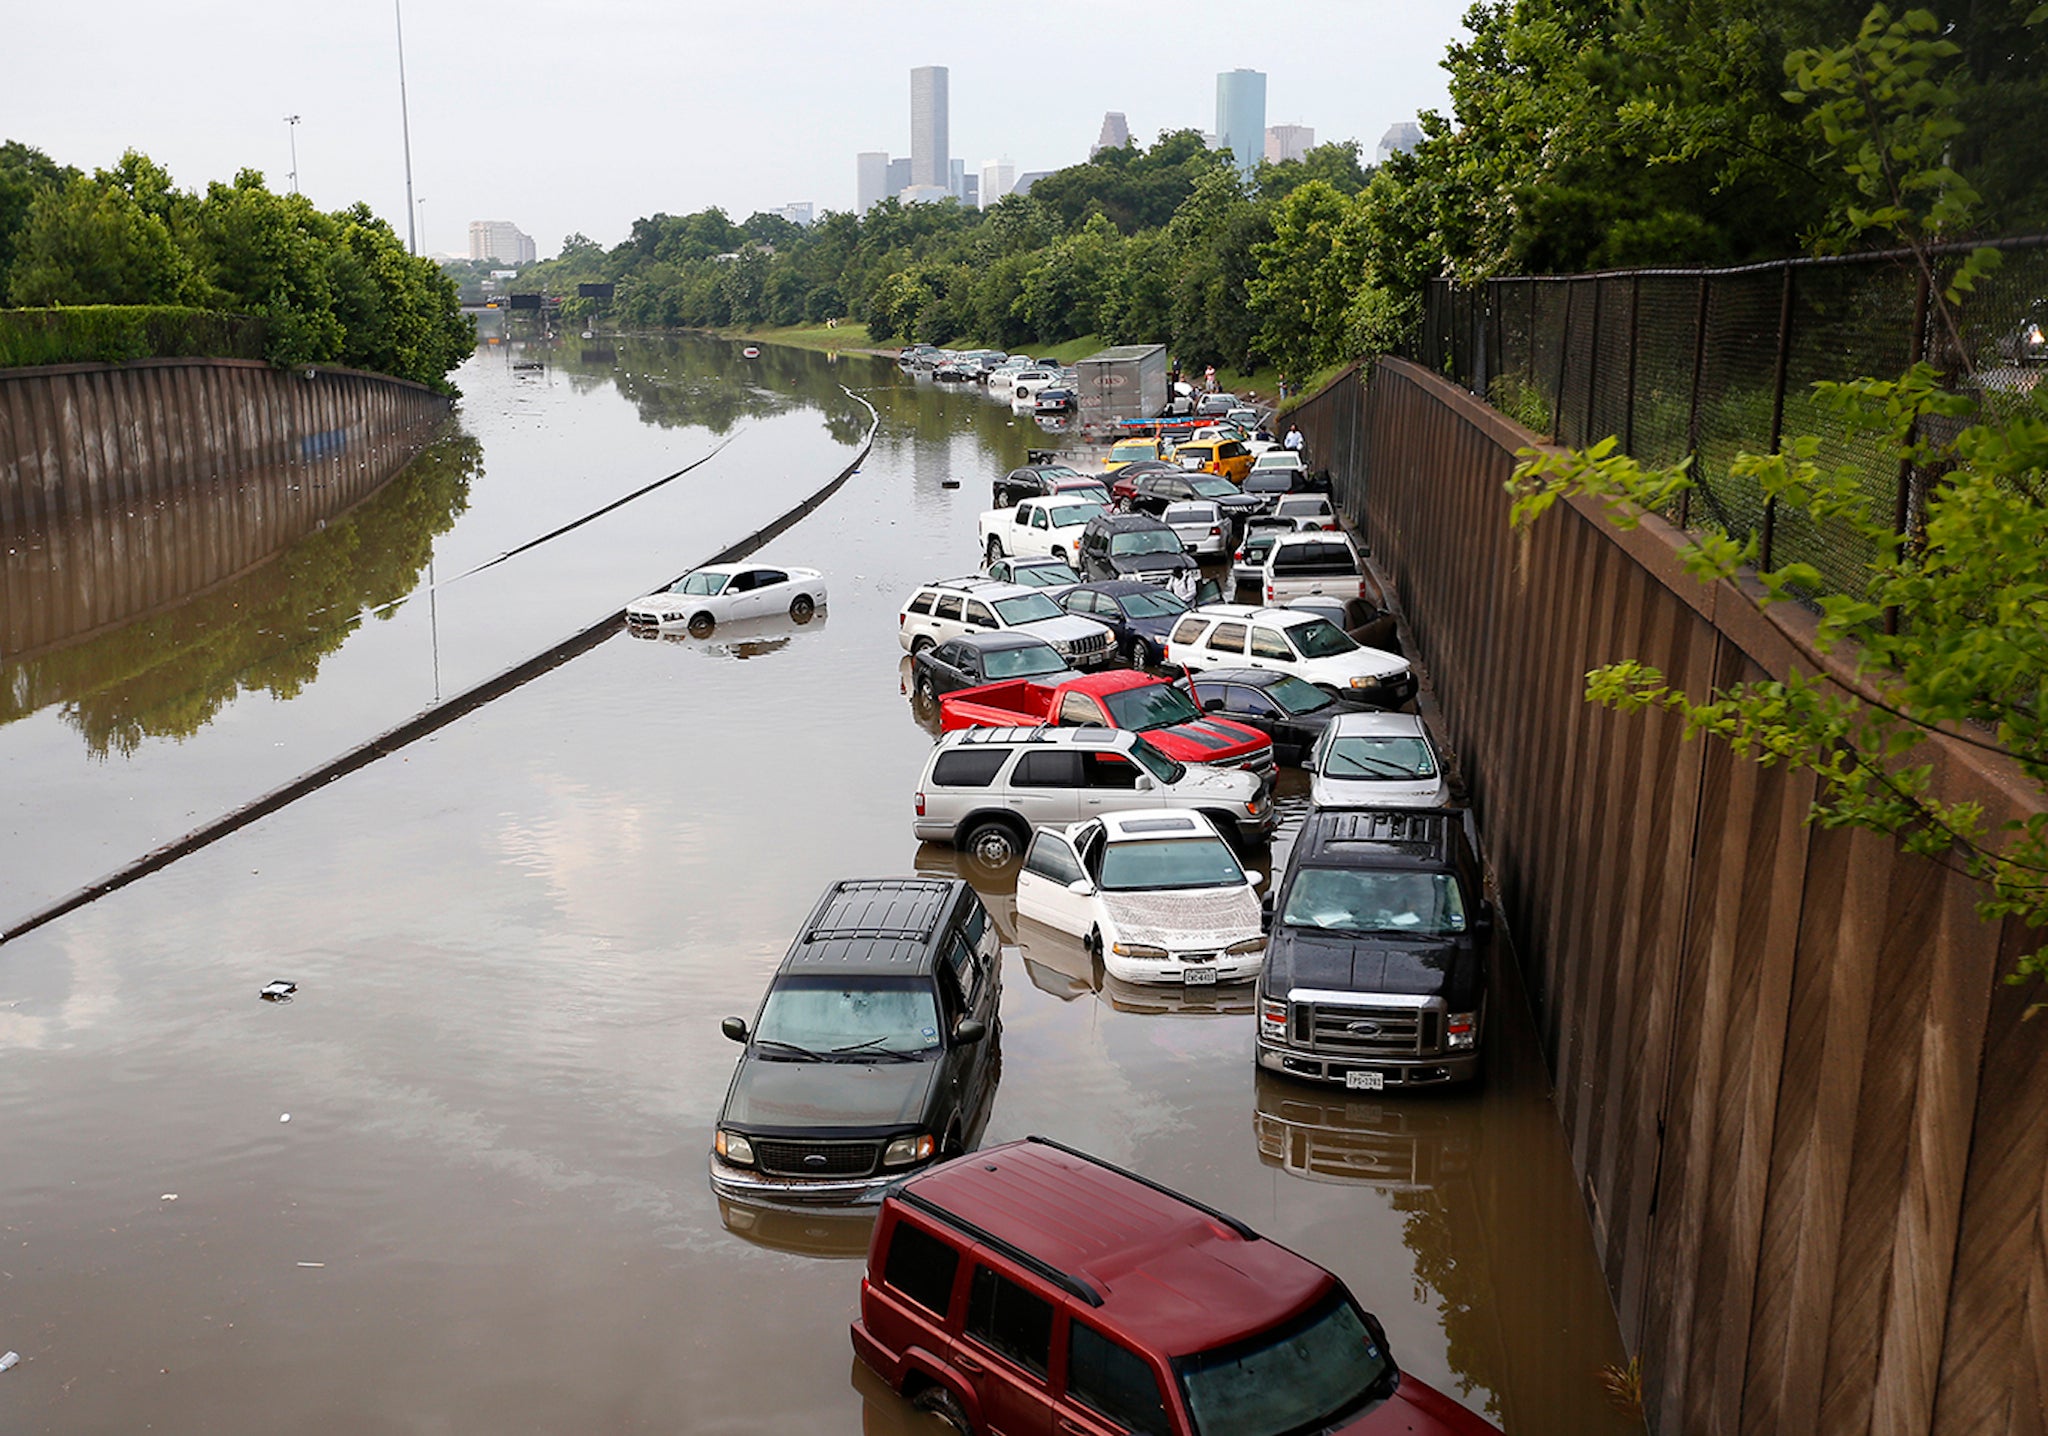 Texas Flood Photos of the historic and devastating flood that rocked